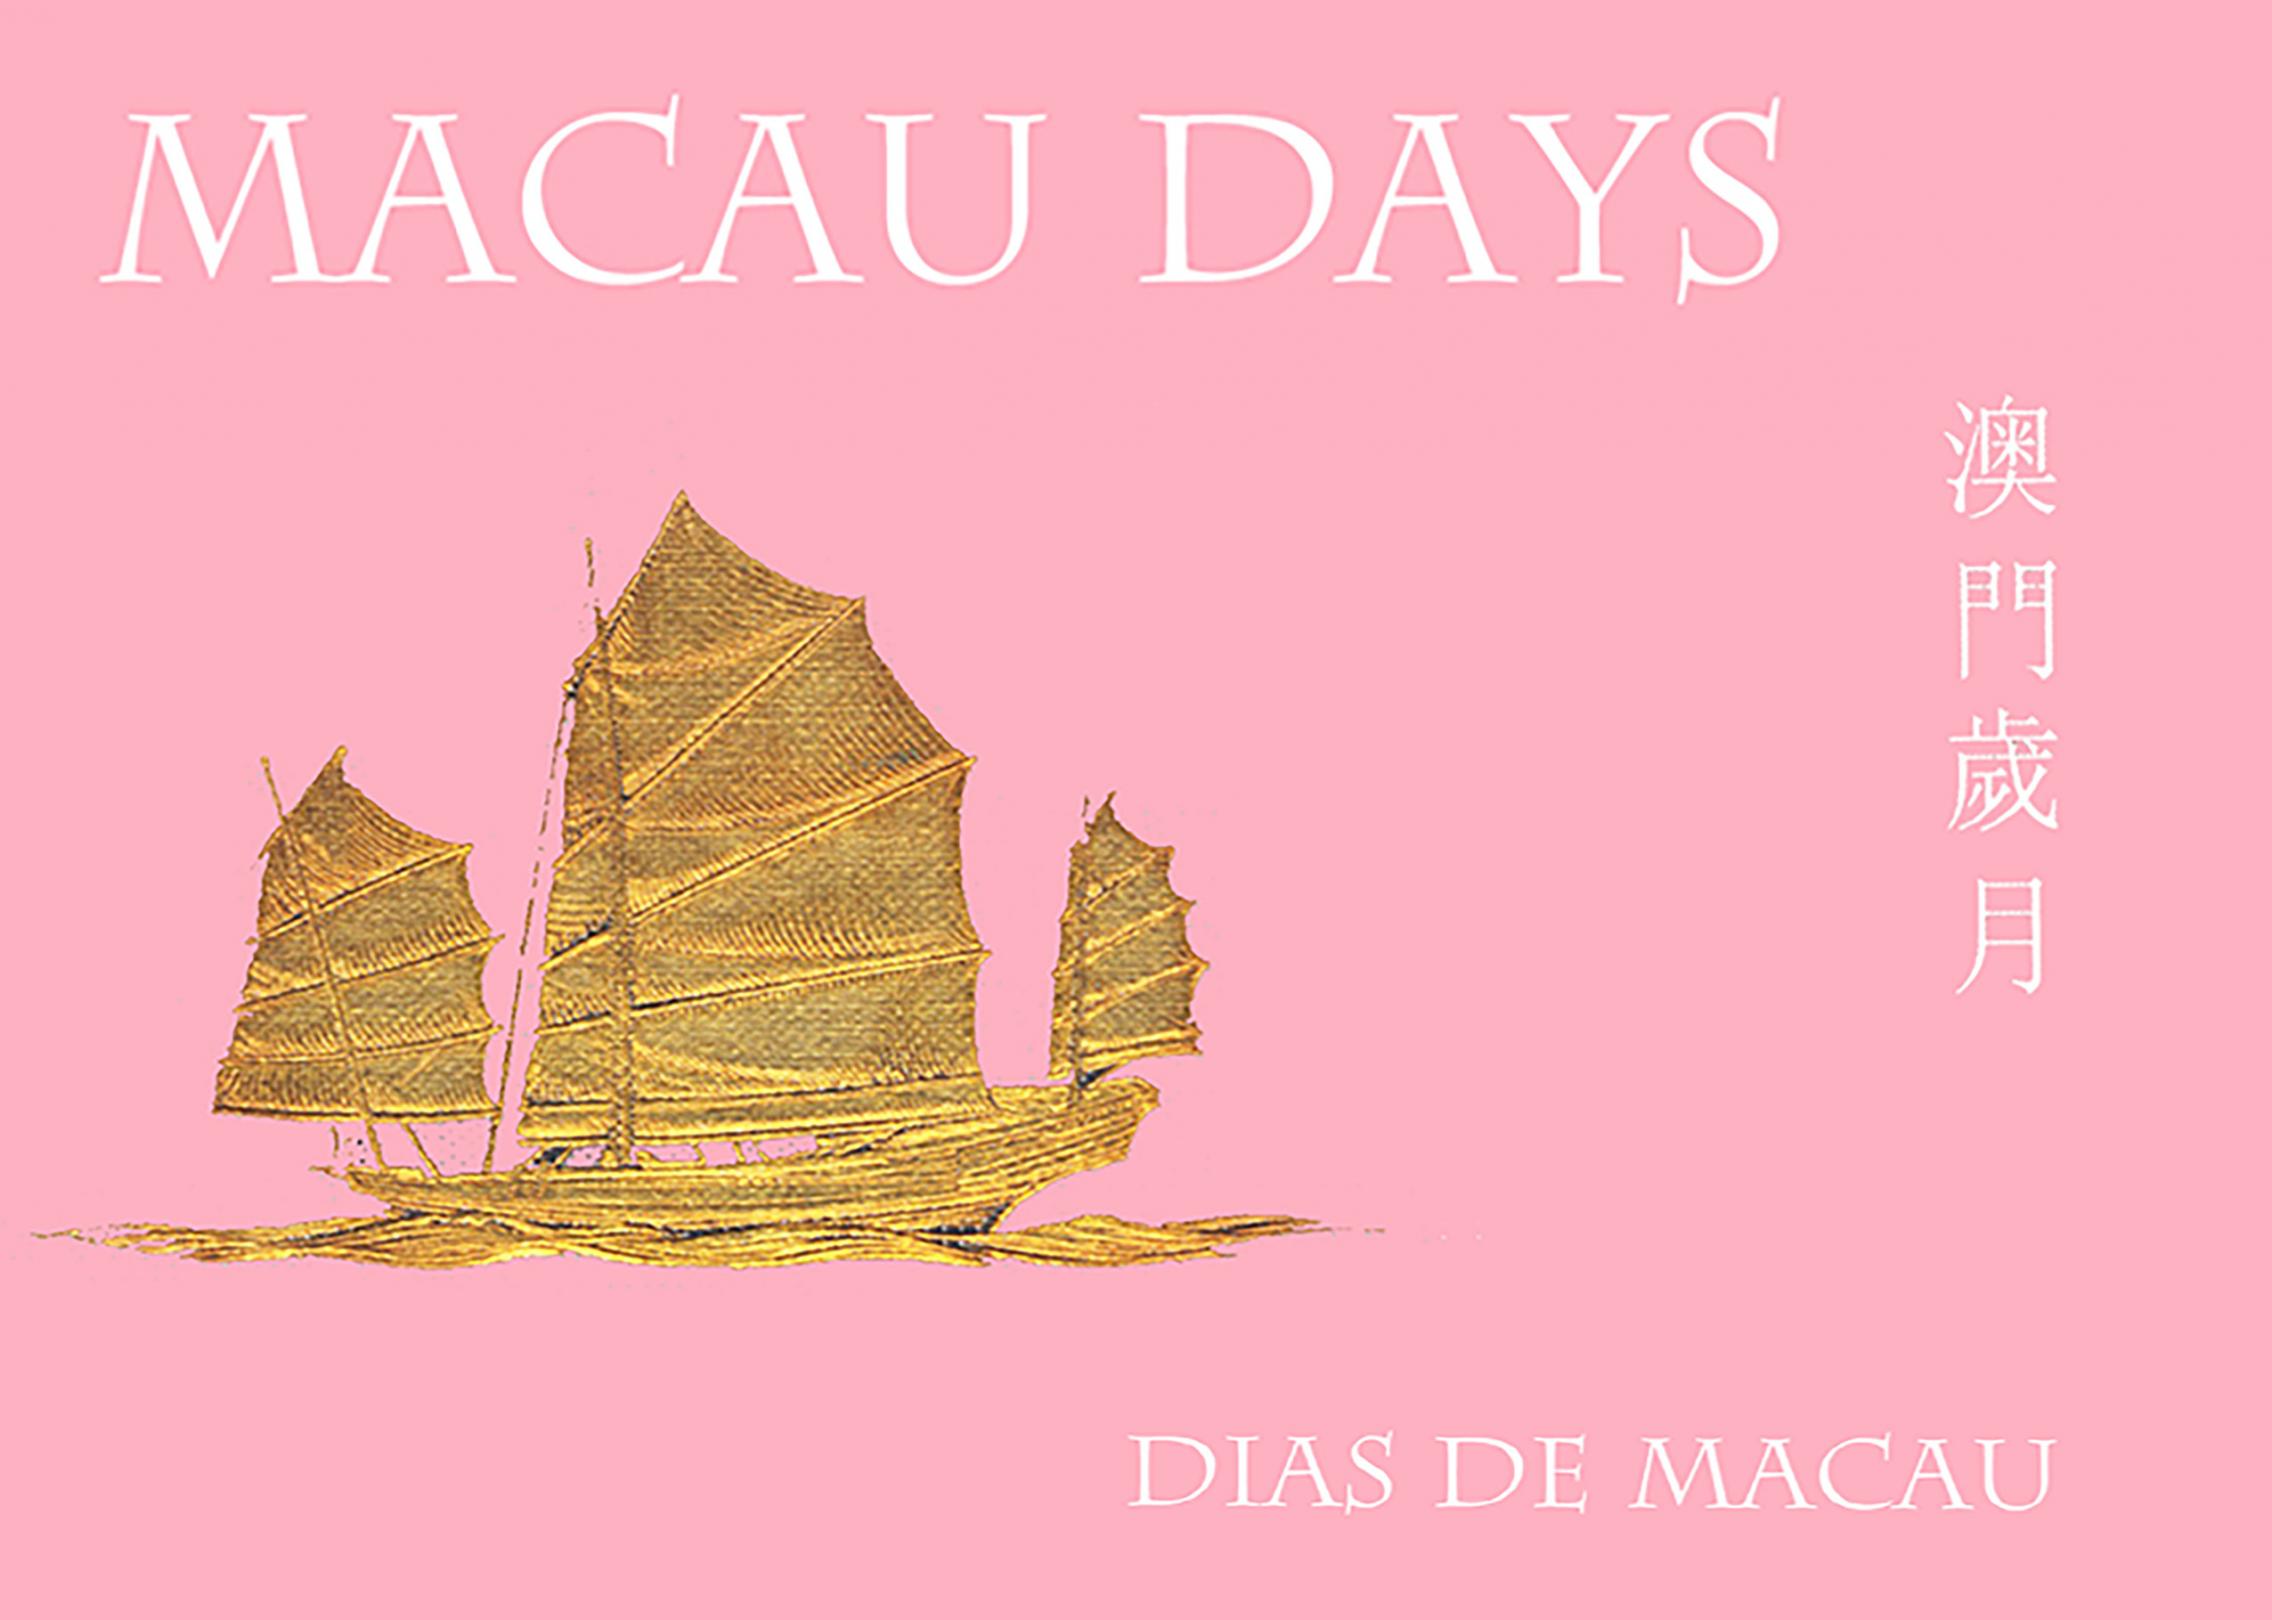 Macau Days